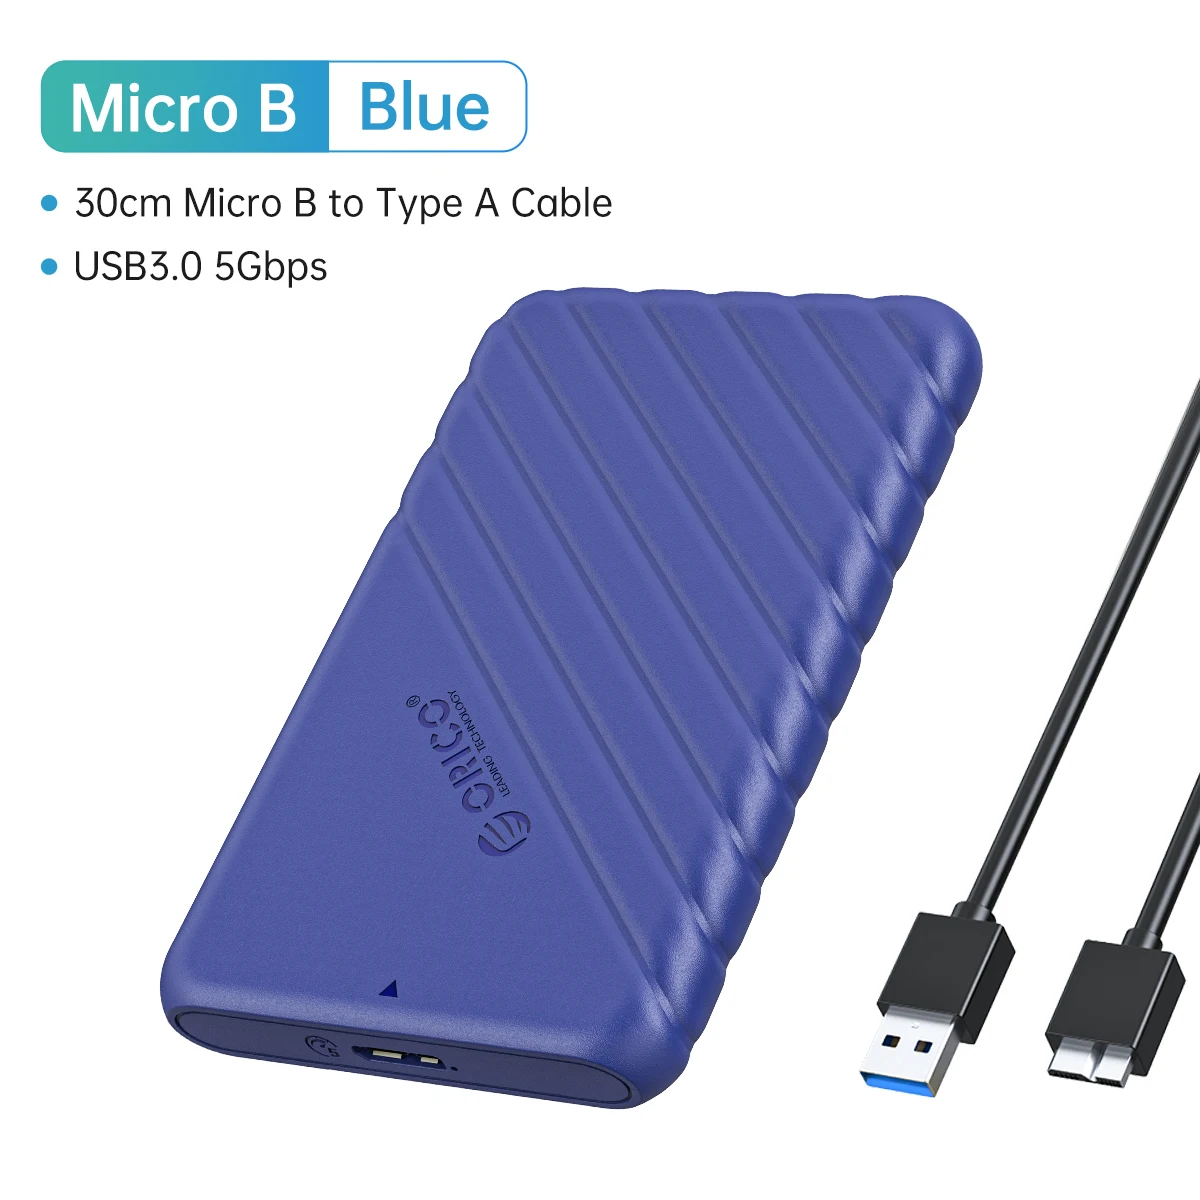 Micro B to USB 3.0